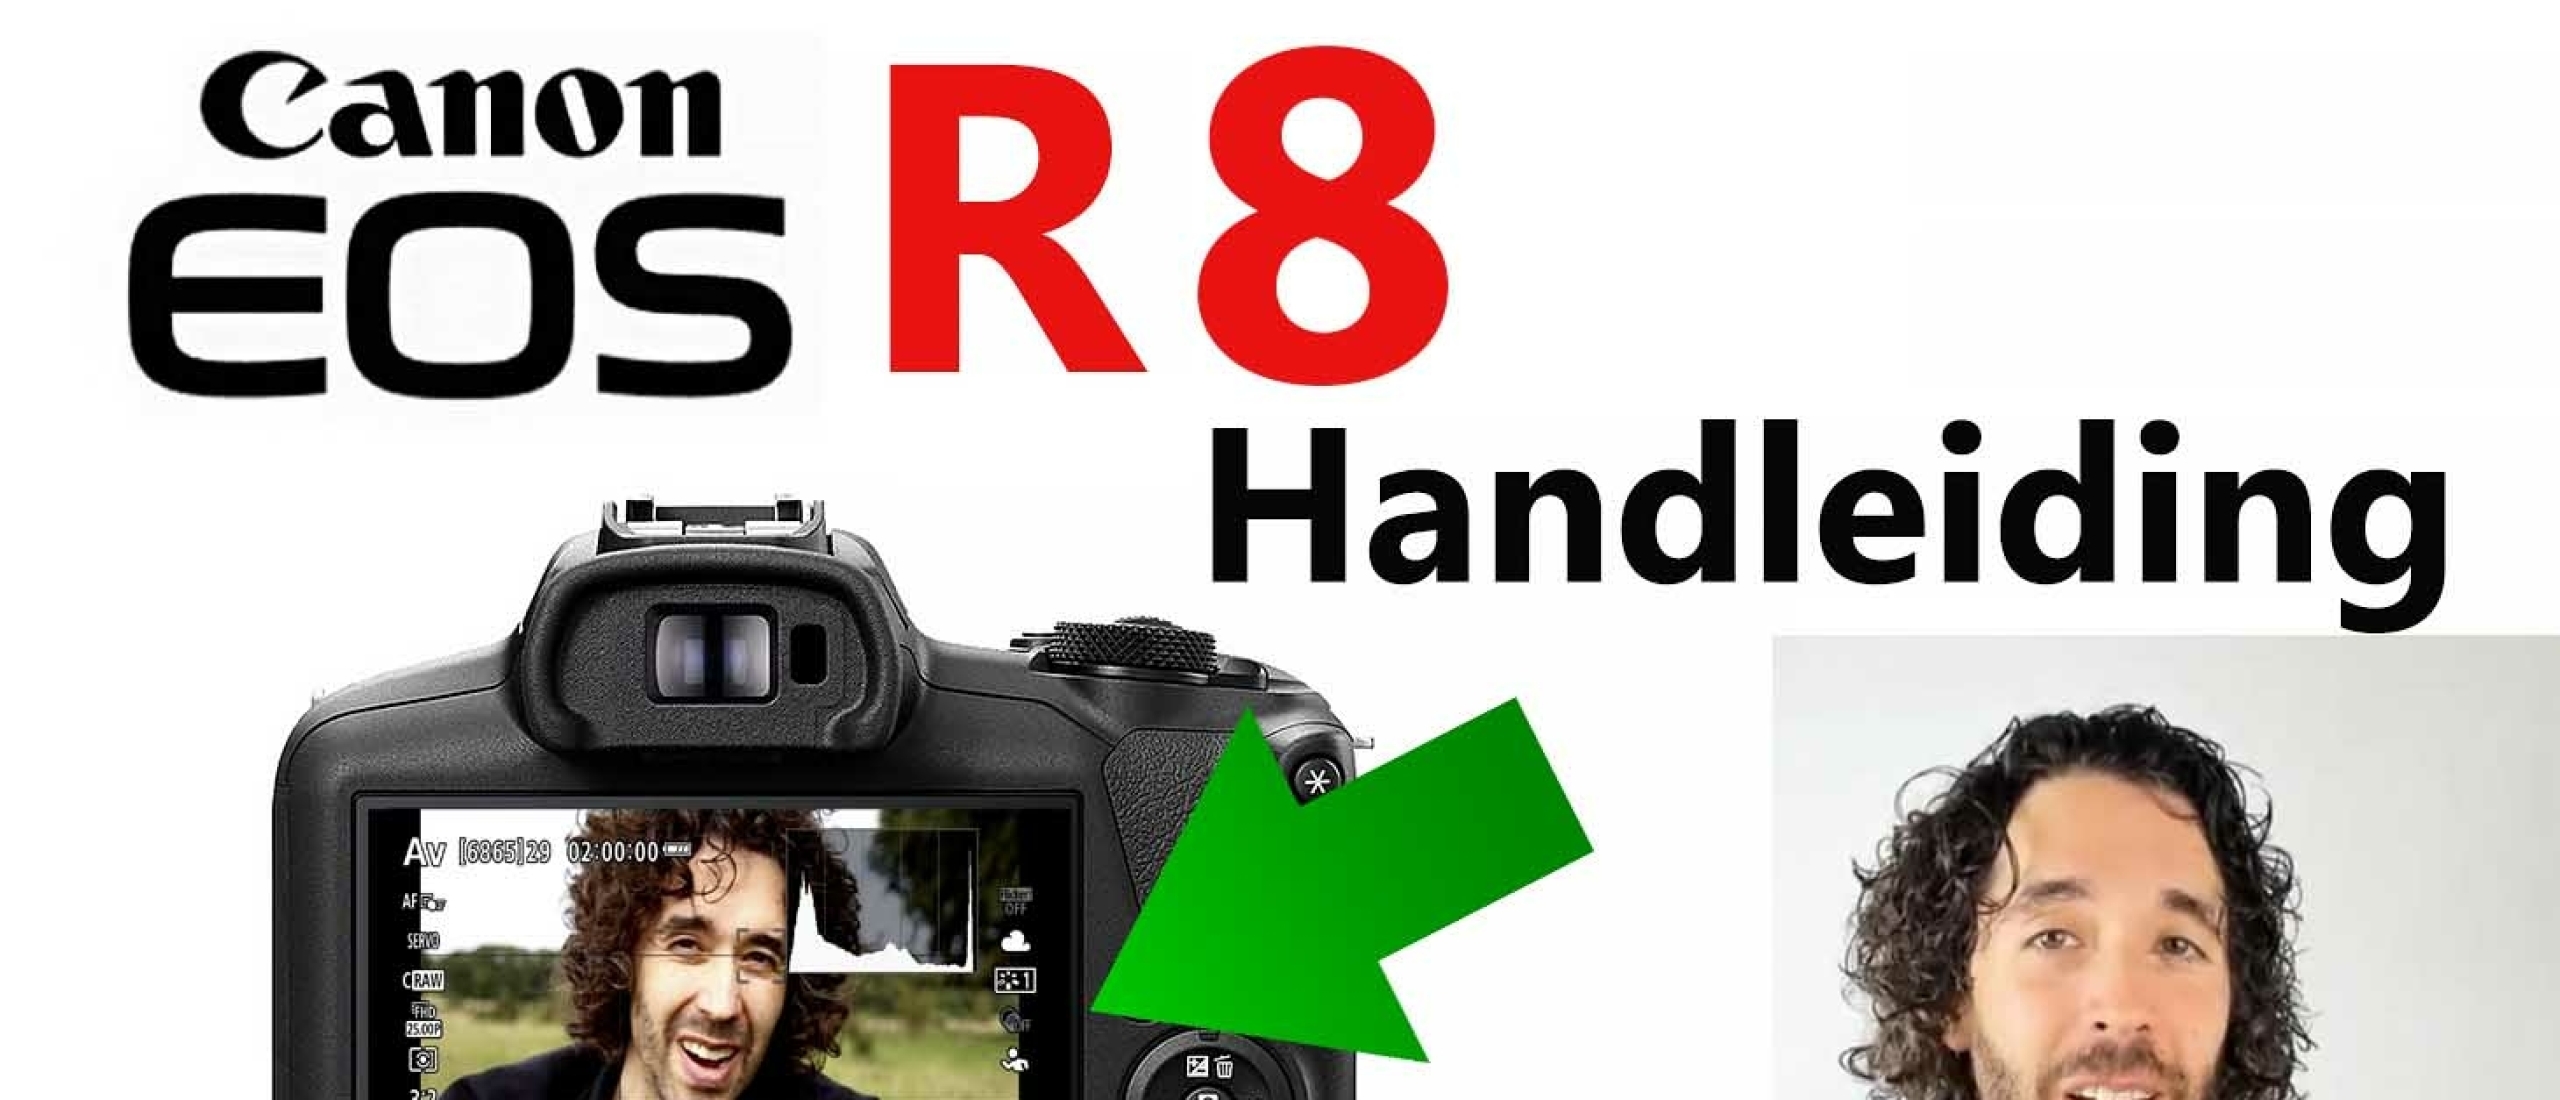 Canon EOS R8 Systeem camera Handleiding: Functies, knoppen, menu en instellingen uitgelegd